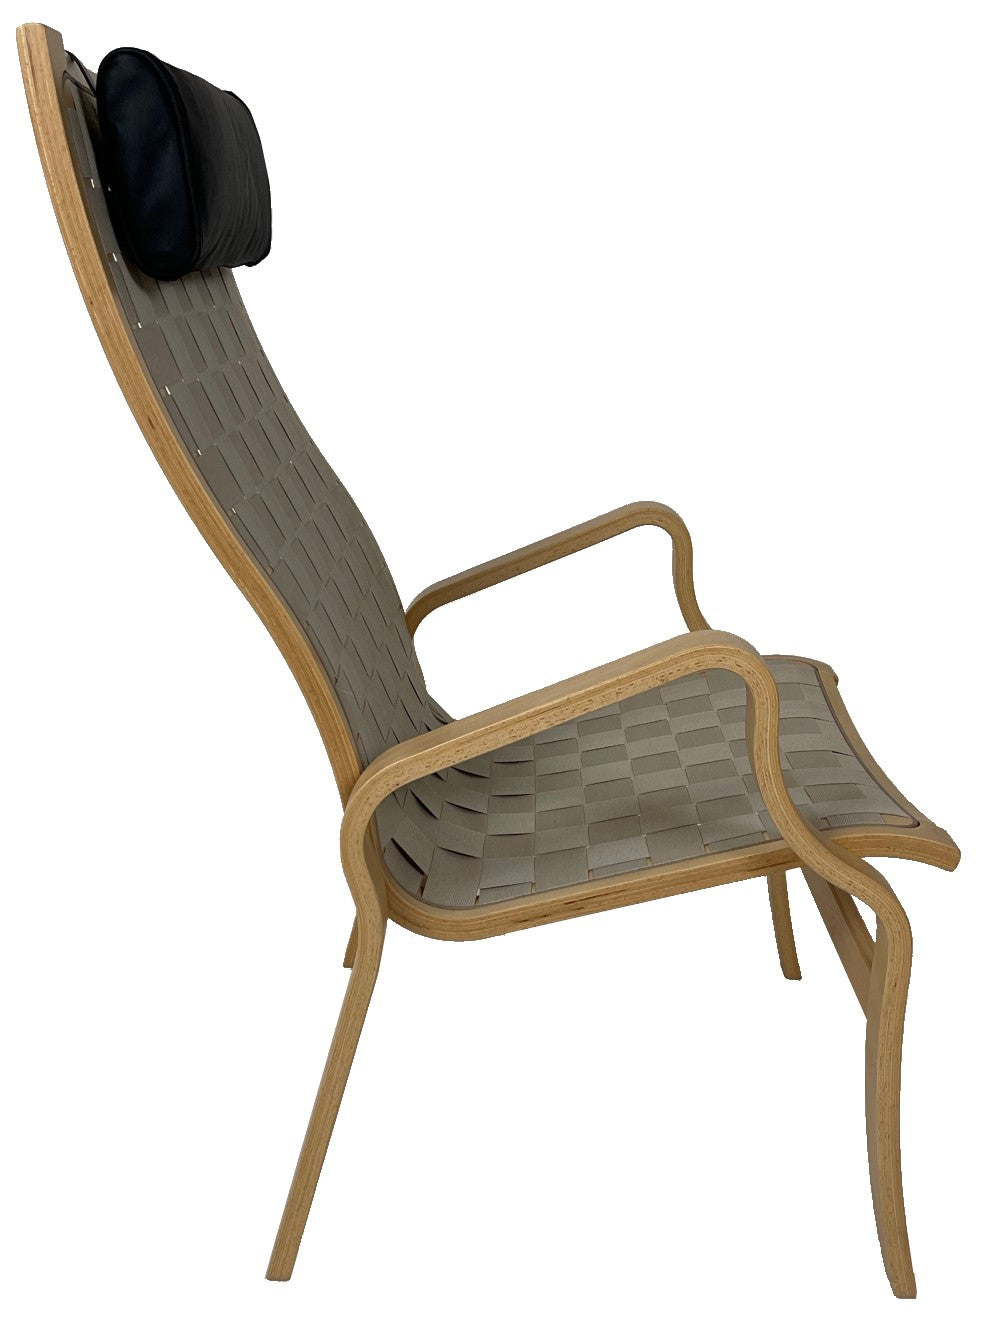 Nielsen Design Mobler Bern HB Occasional Chair w/ Ottoman